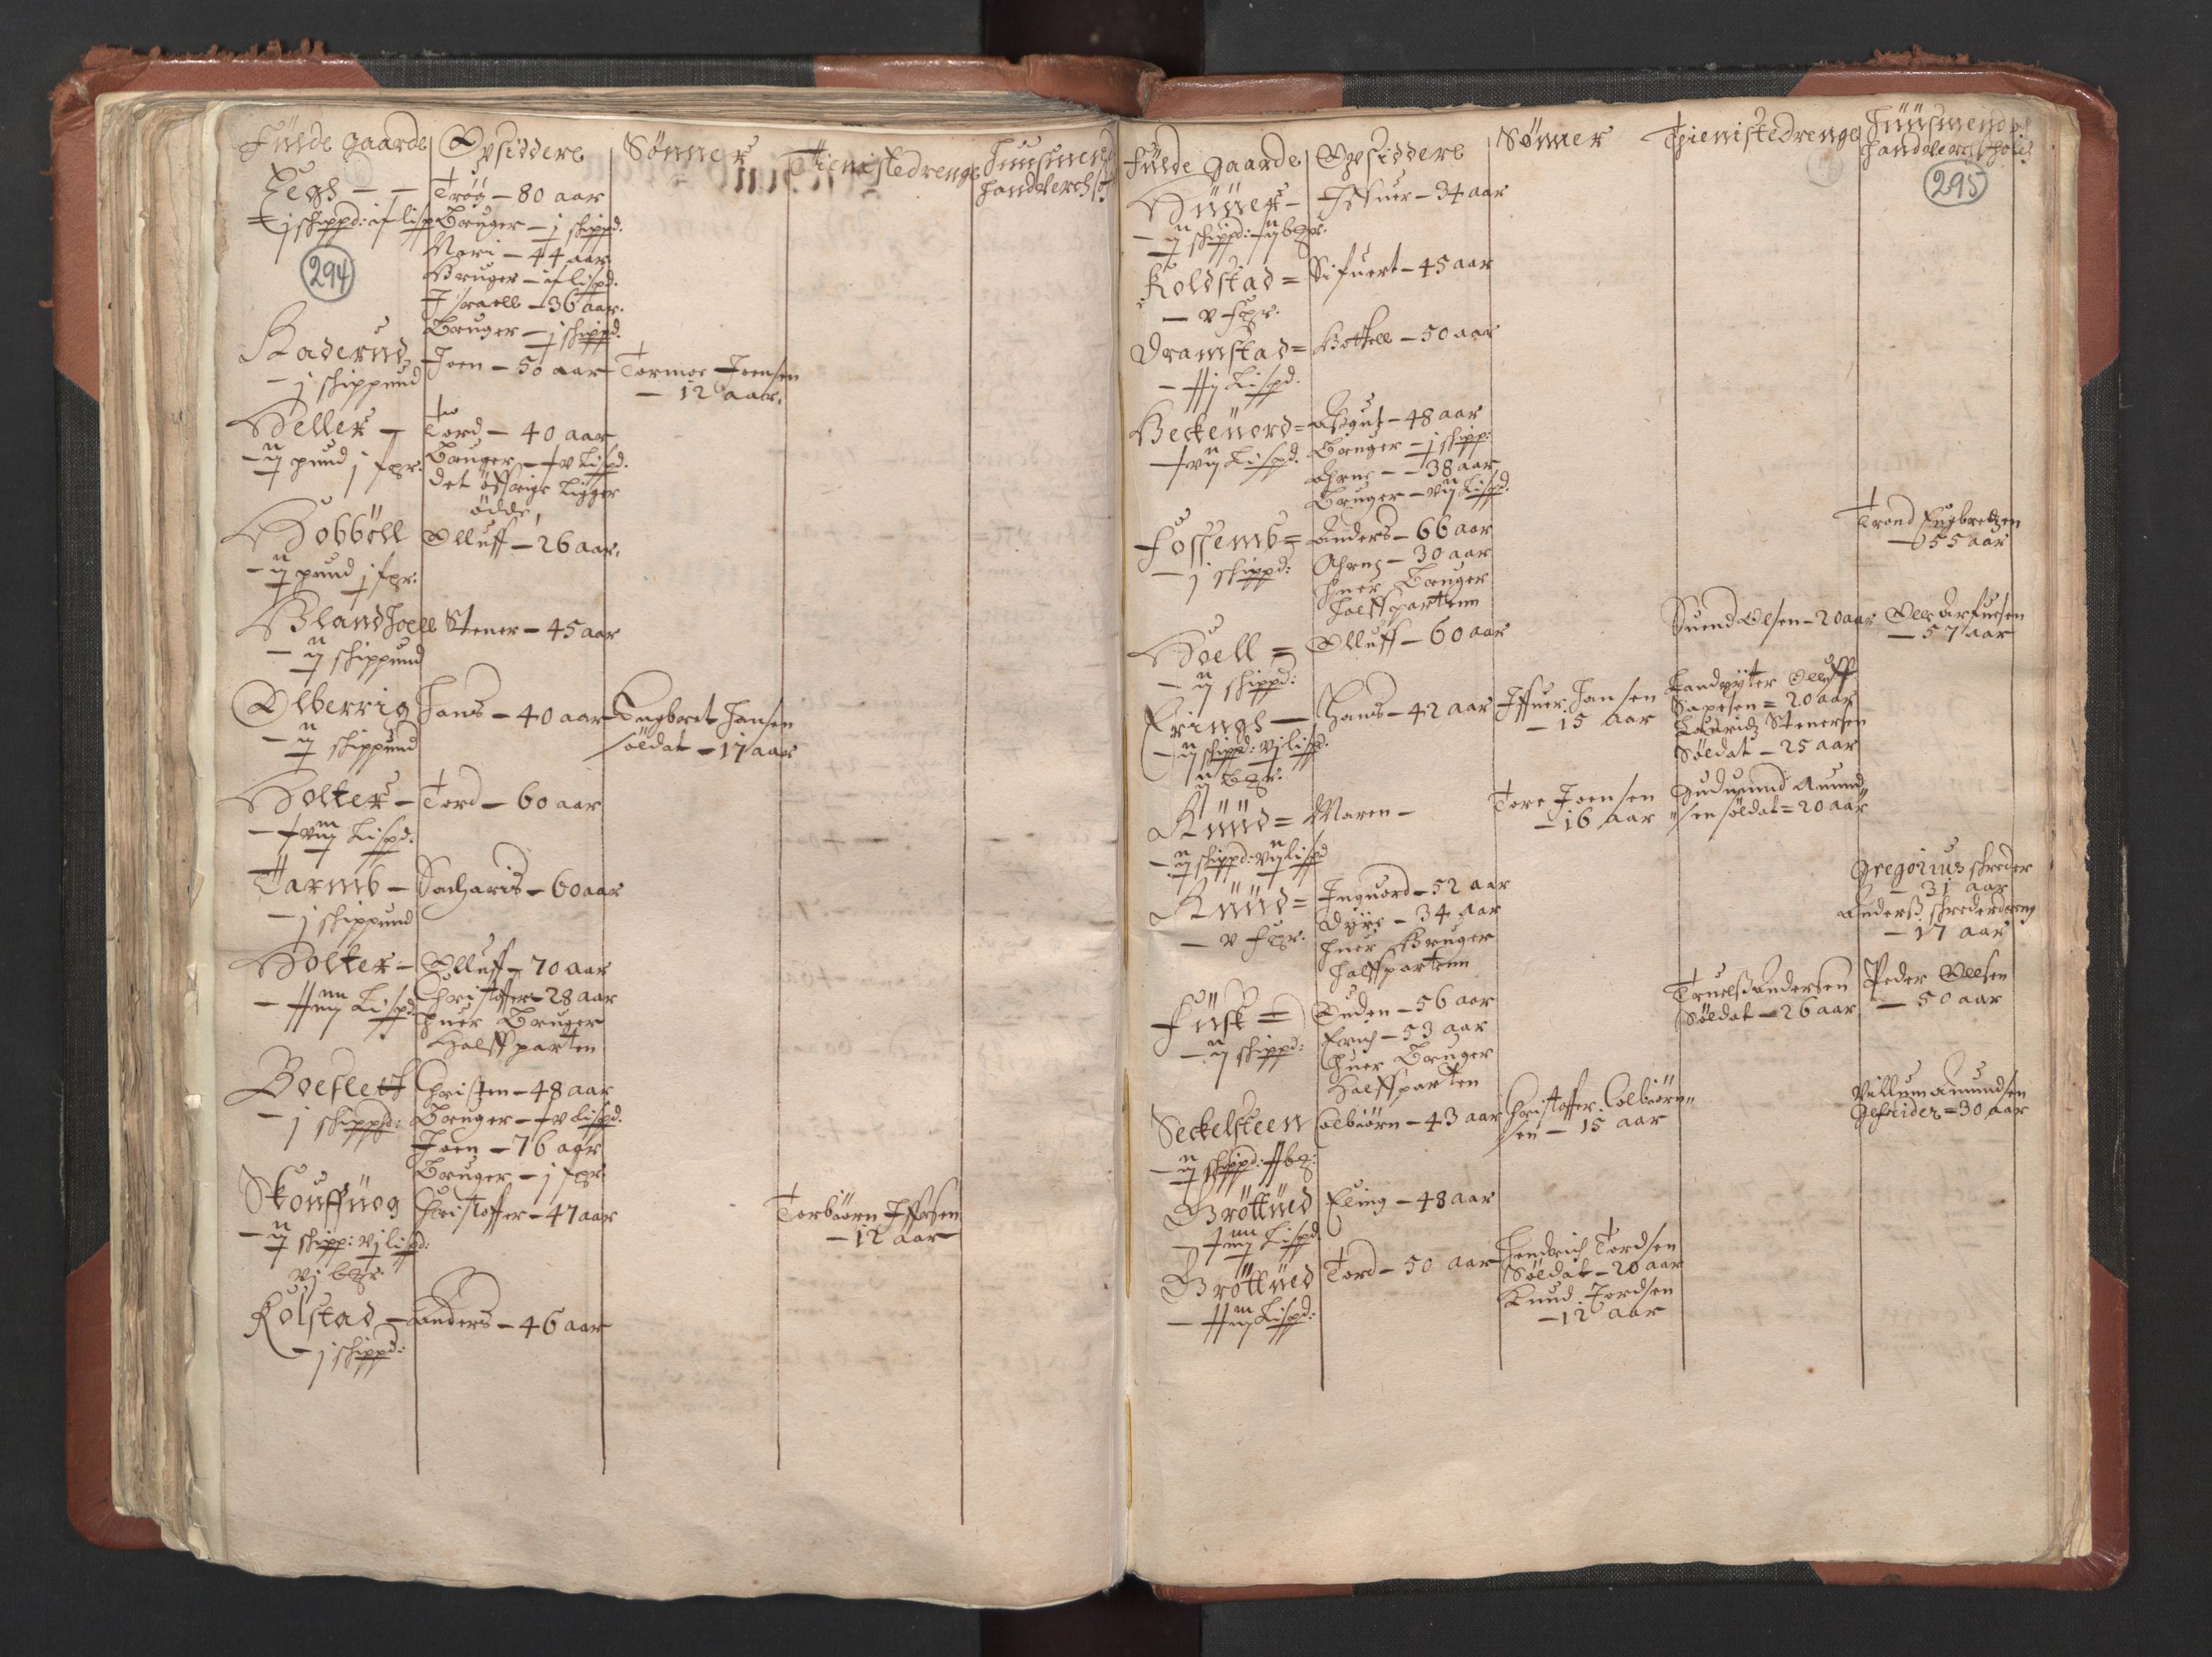 RA, Fogdenes og sorenskrivernes manntall 1664-1666, nr. 1: Fogderier (len og skipreider) i nåværende Østfold fylke, 1664, s. 294-295